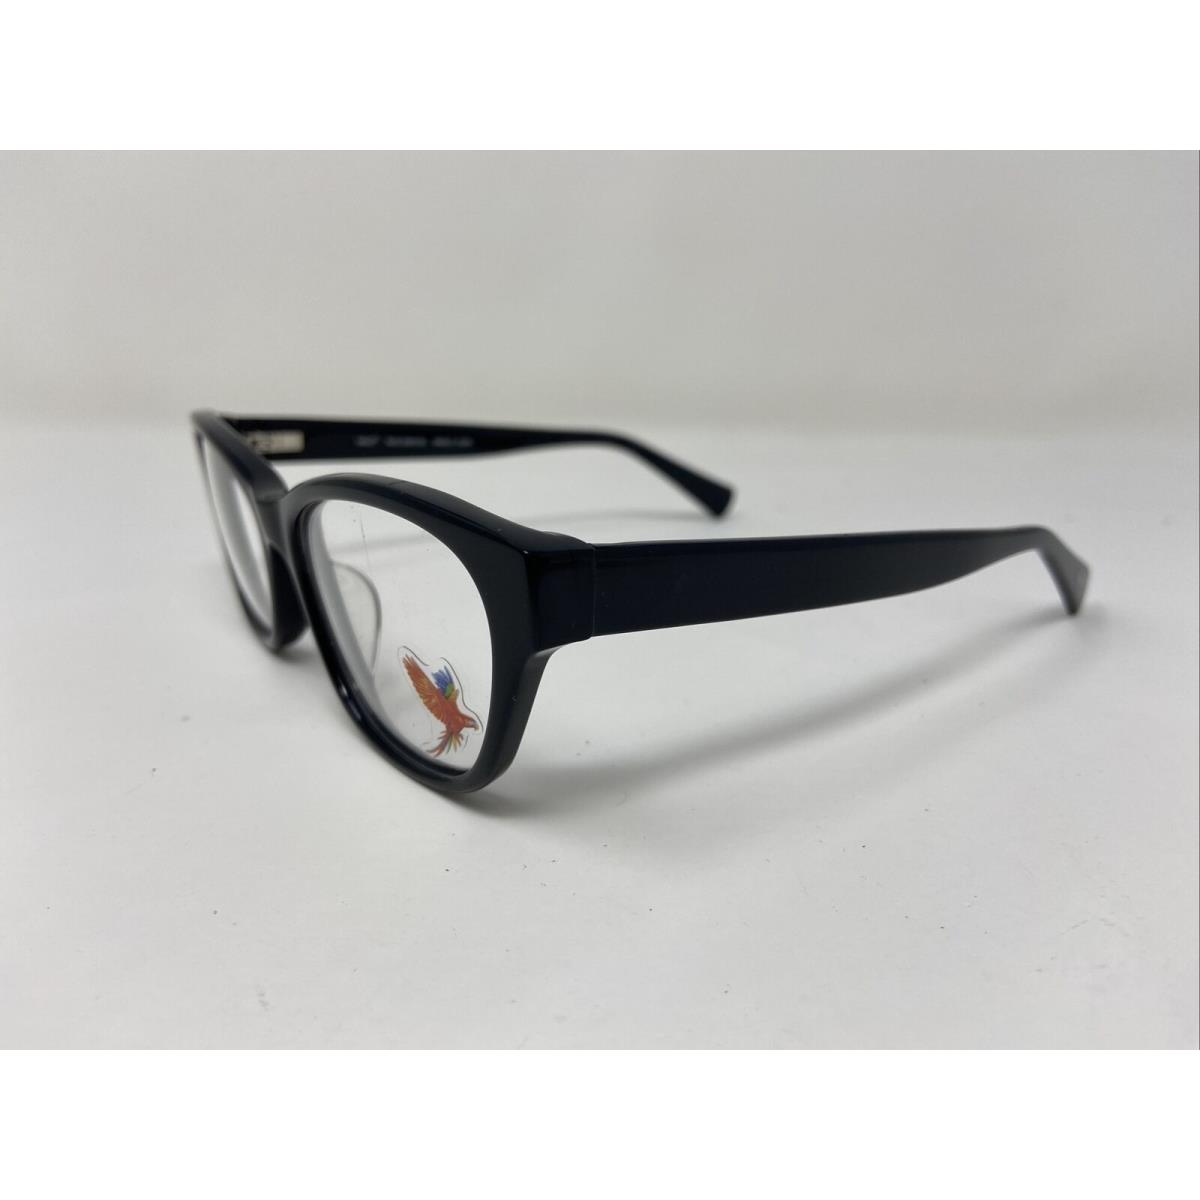 Maui Jim eyeglasses  - Black Frame 0